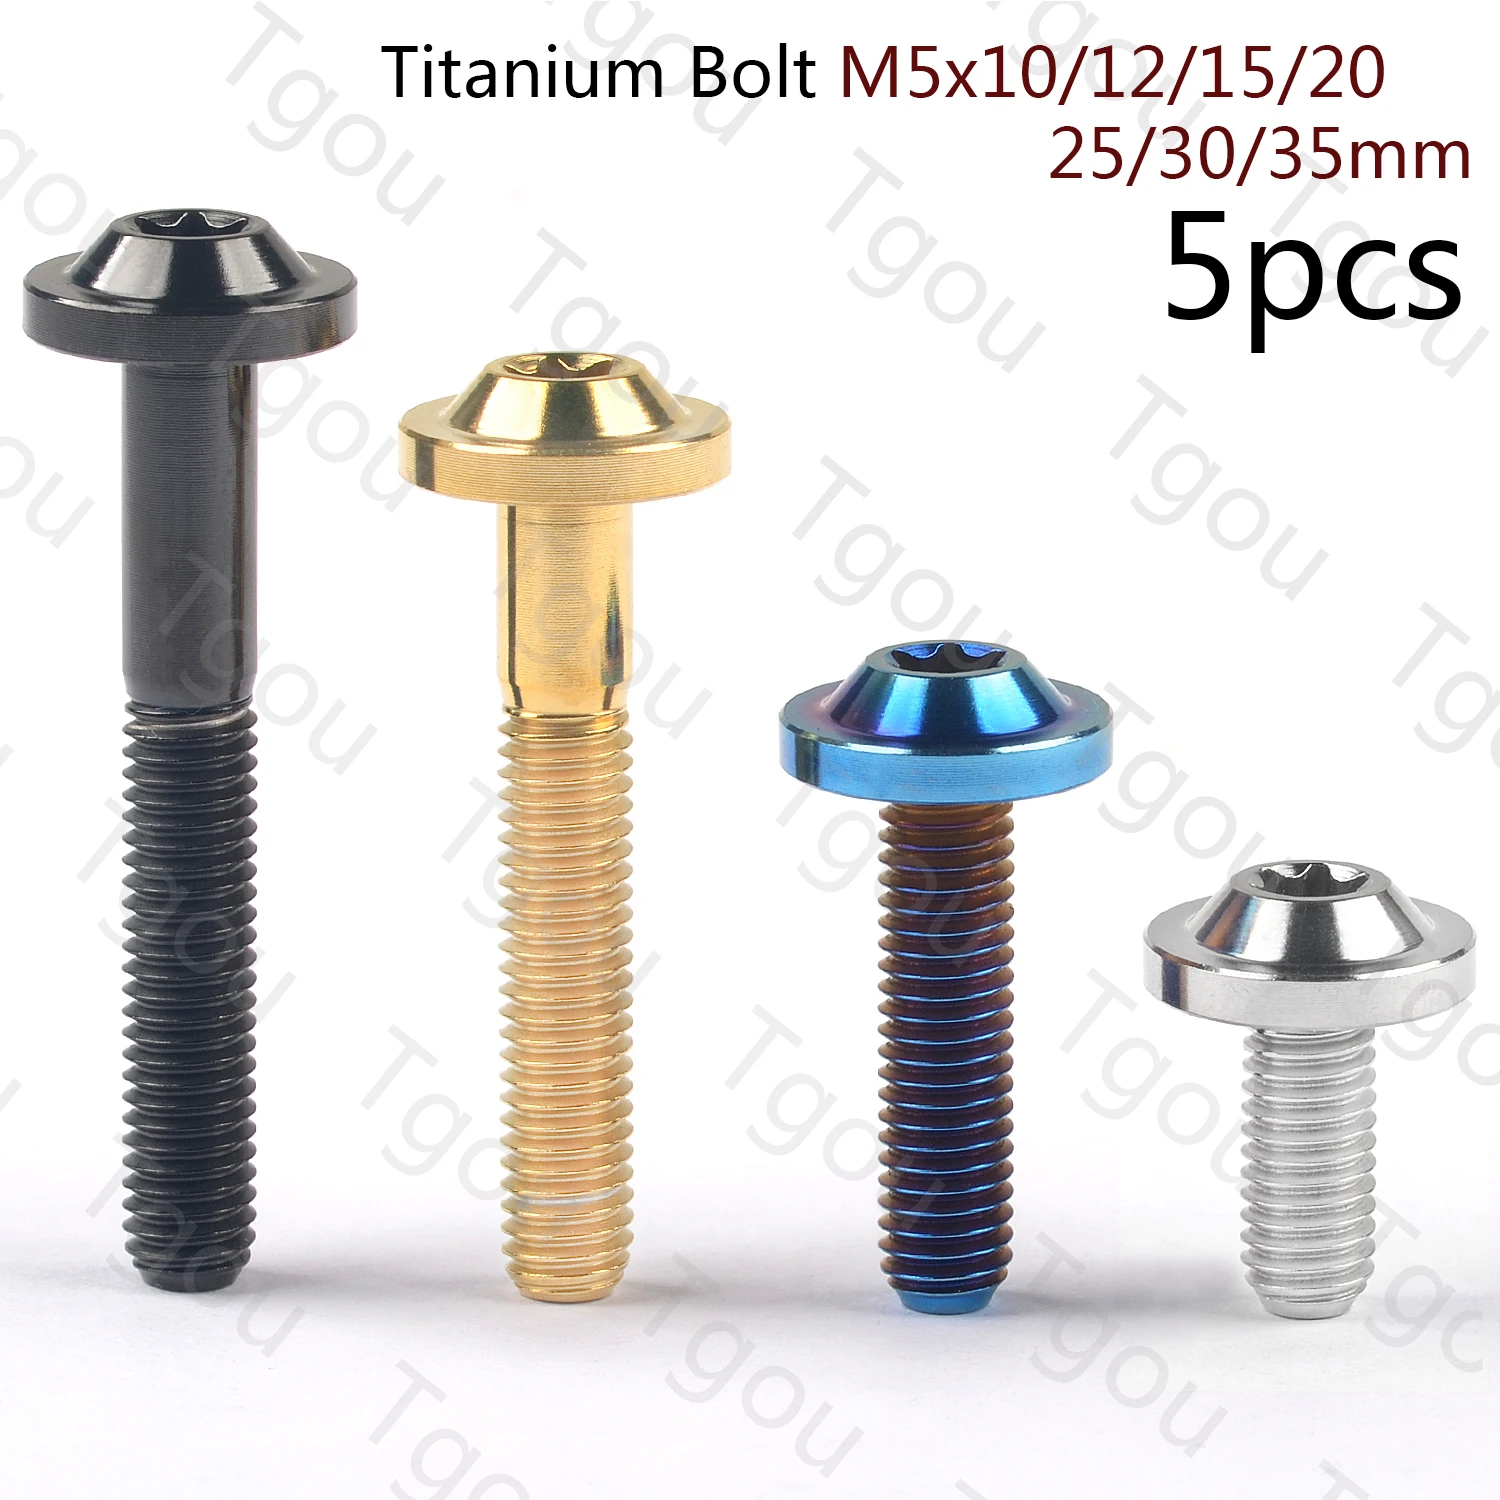 

Tgou Titanium Bolt M5x10 12 15 20 25 30 35mm Torx T25 Plum Head Screws for Bike Motorcycle 5pcs